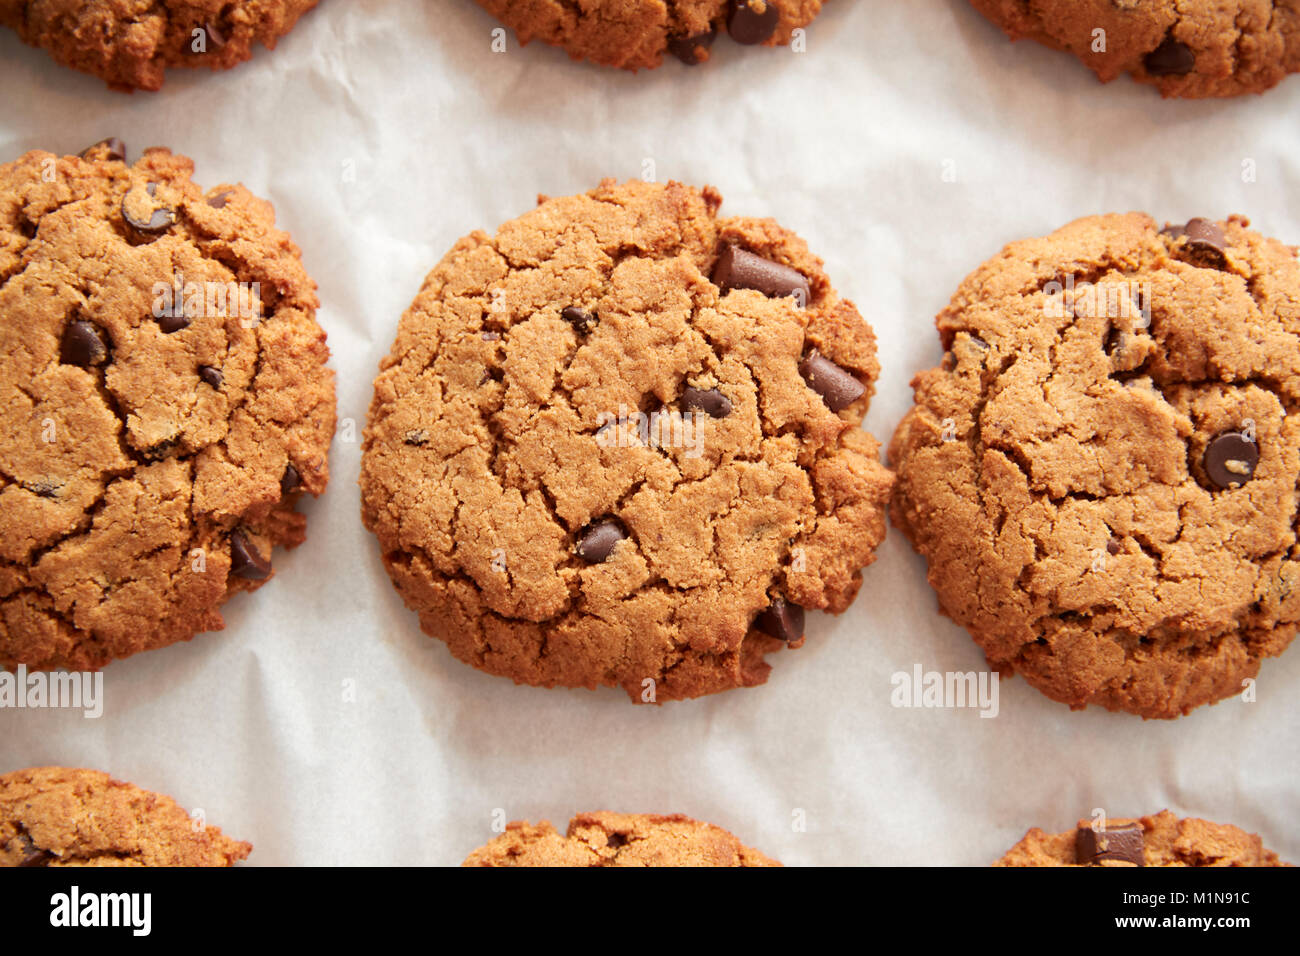 Display Of Freshly Baked Choc Chip Cookies In Coffee Shop Stock Photo